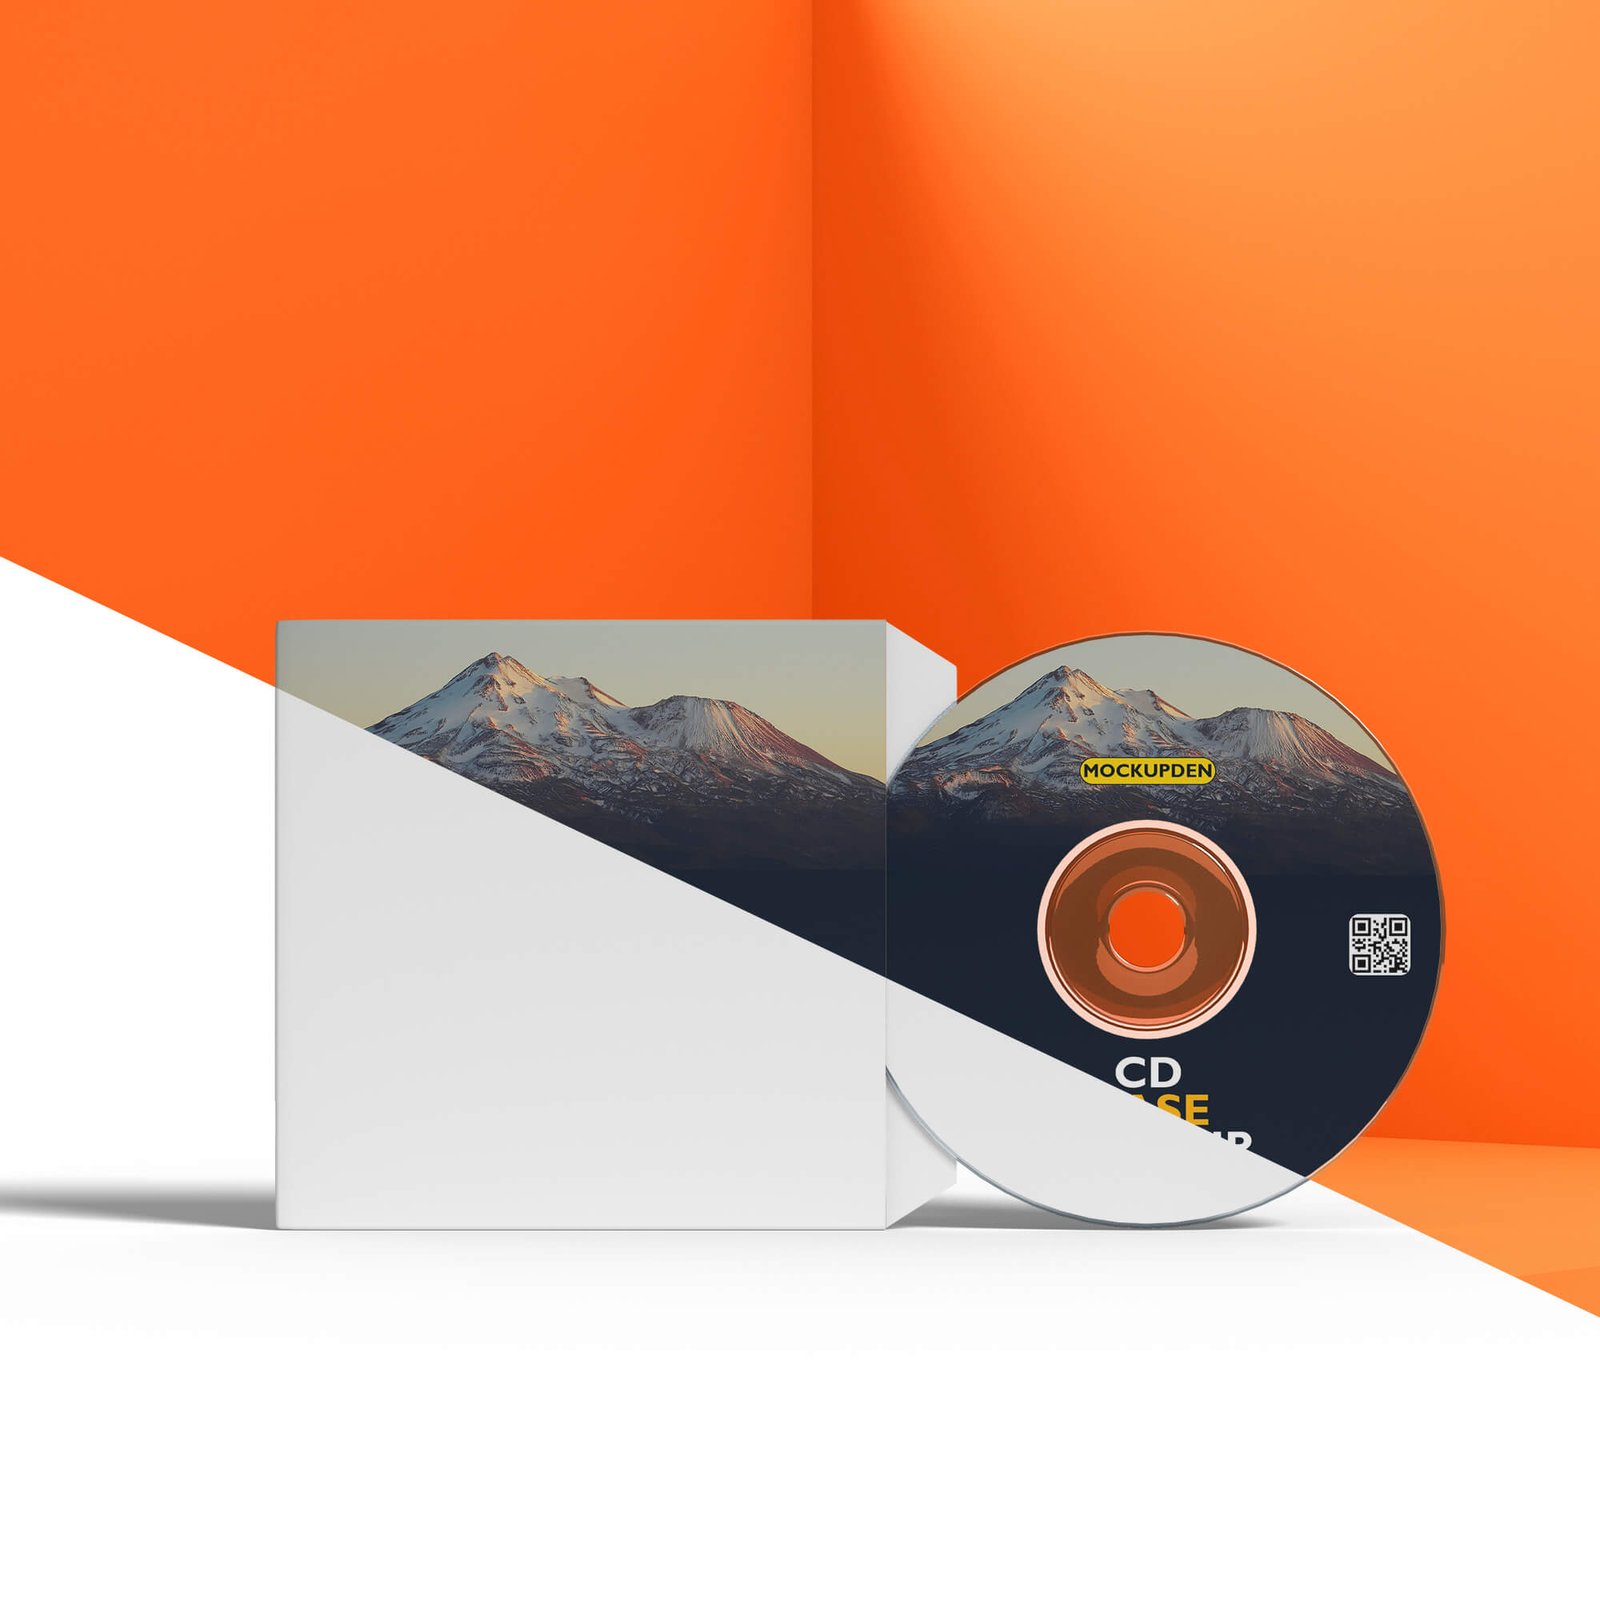 Editable Free CD Case Mockup PSD Template